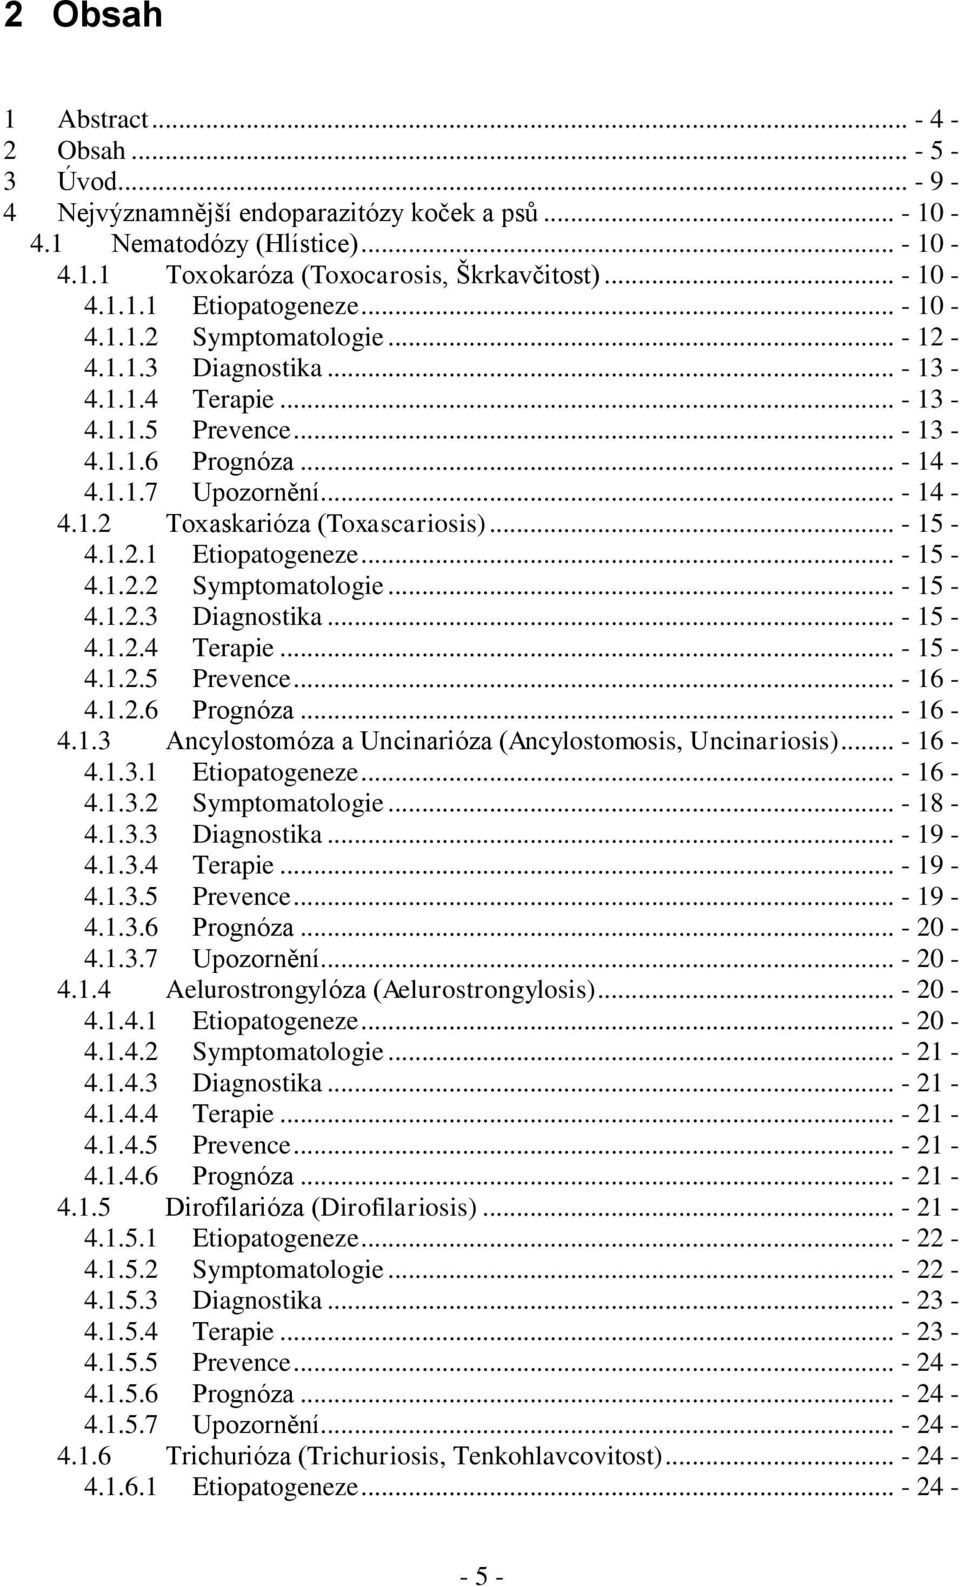 .. - 15-4.1.2.1 Etiopatogeneze... - 15-4.1.2.2 Symptomatologie... - 15-4.1.2.3 Diagnostika... - 15-4.1.2.4 Terapie... - 15-4.1.2.5 Prevence... - 16-4.1.2.6 Prognóza... - 16-4.1.3 Ancylostomóza a Uncinarióza (Ancylostomosis, Uncinariosis).